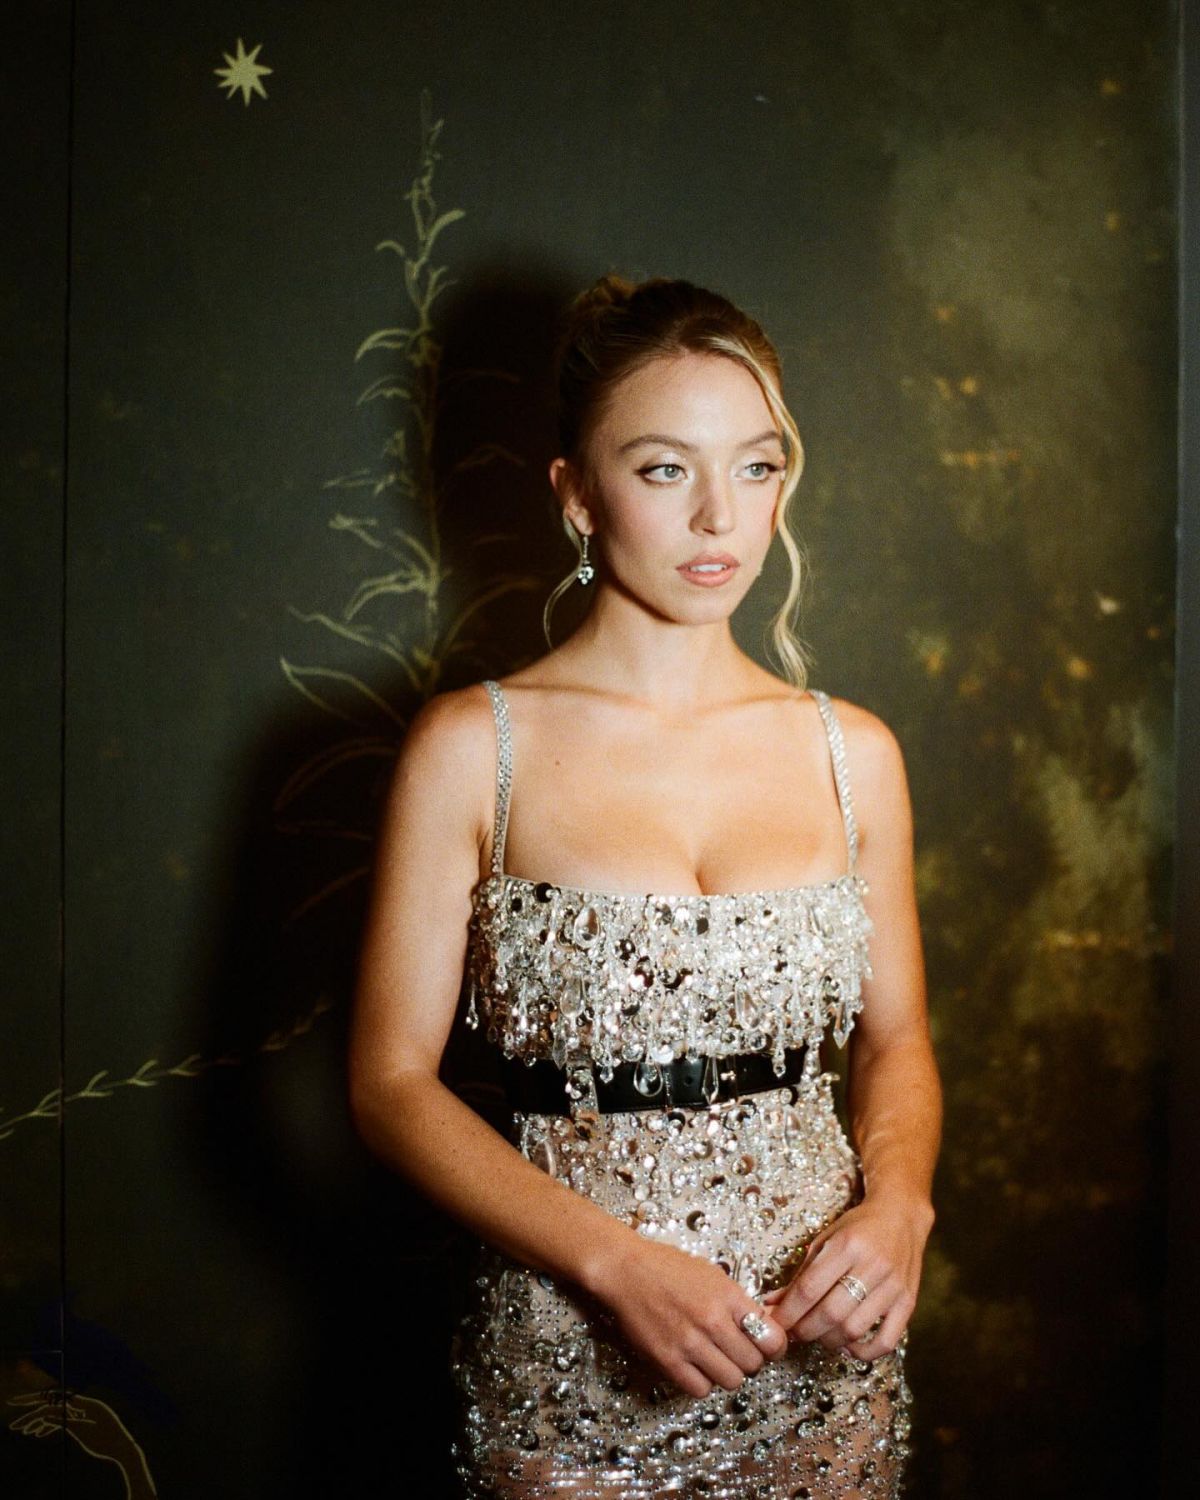 Sydney Sweeney stunning in elegant dress at exclusive shoot 1